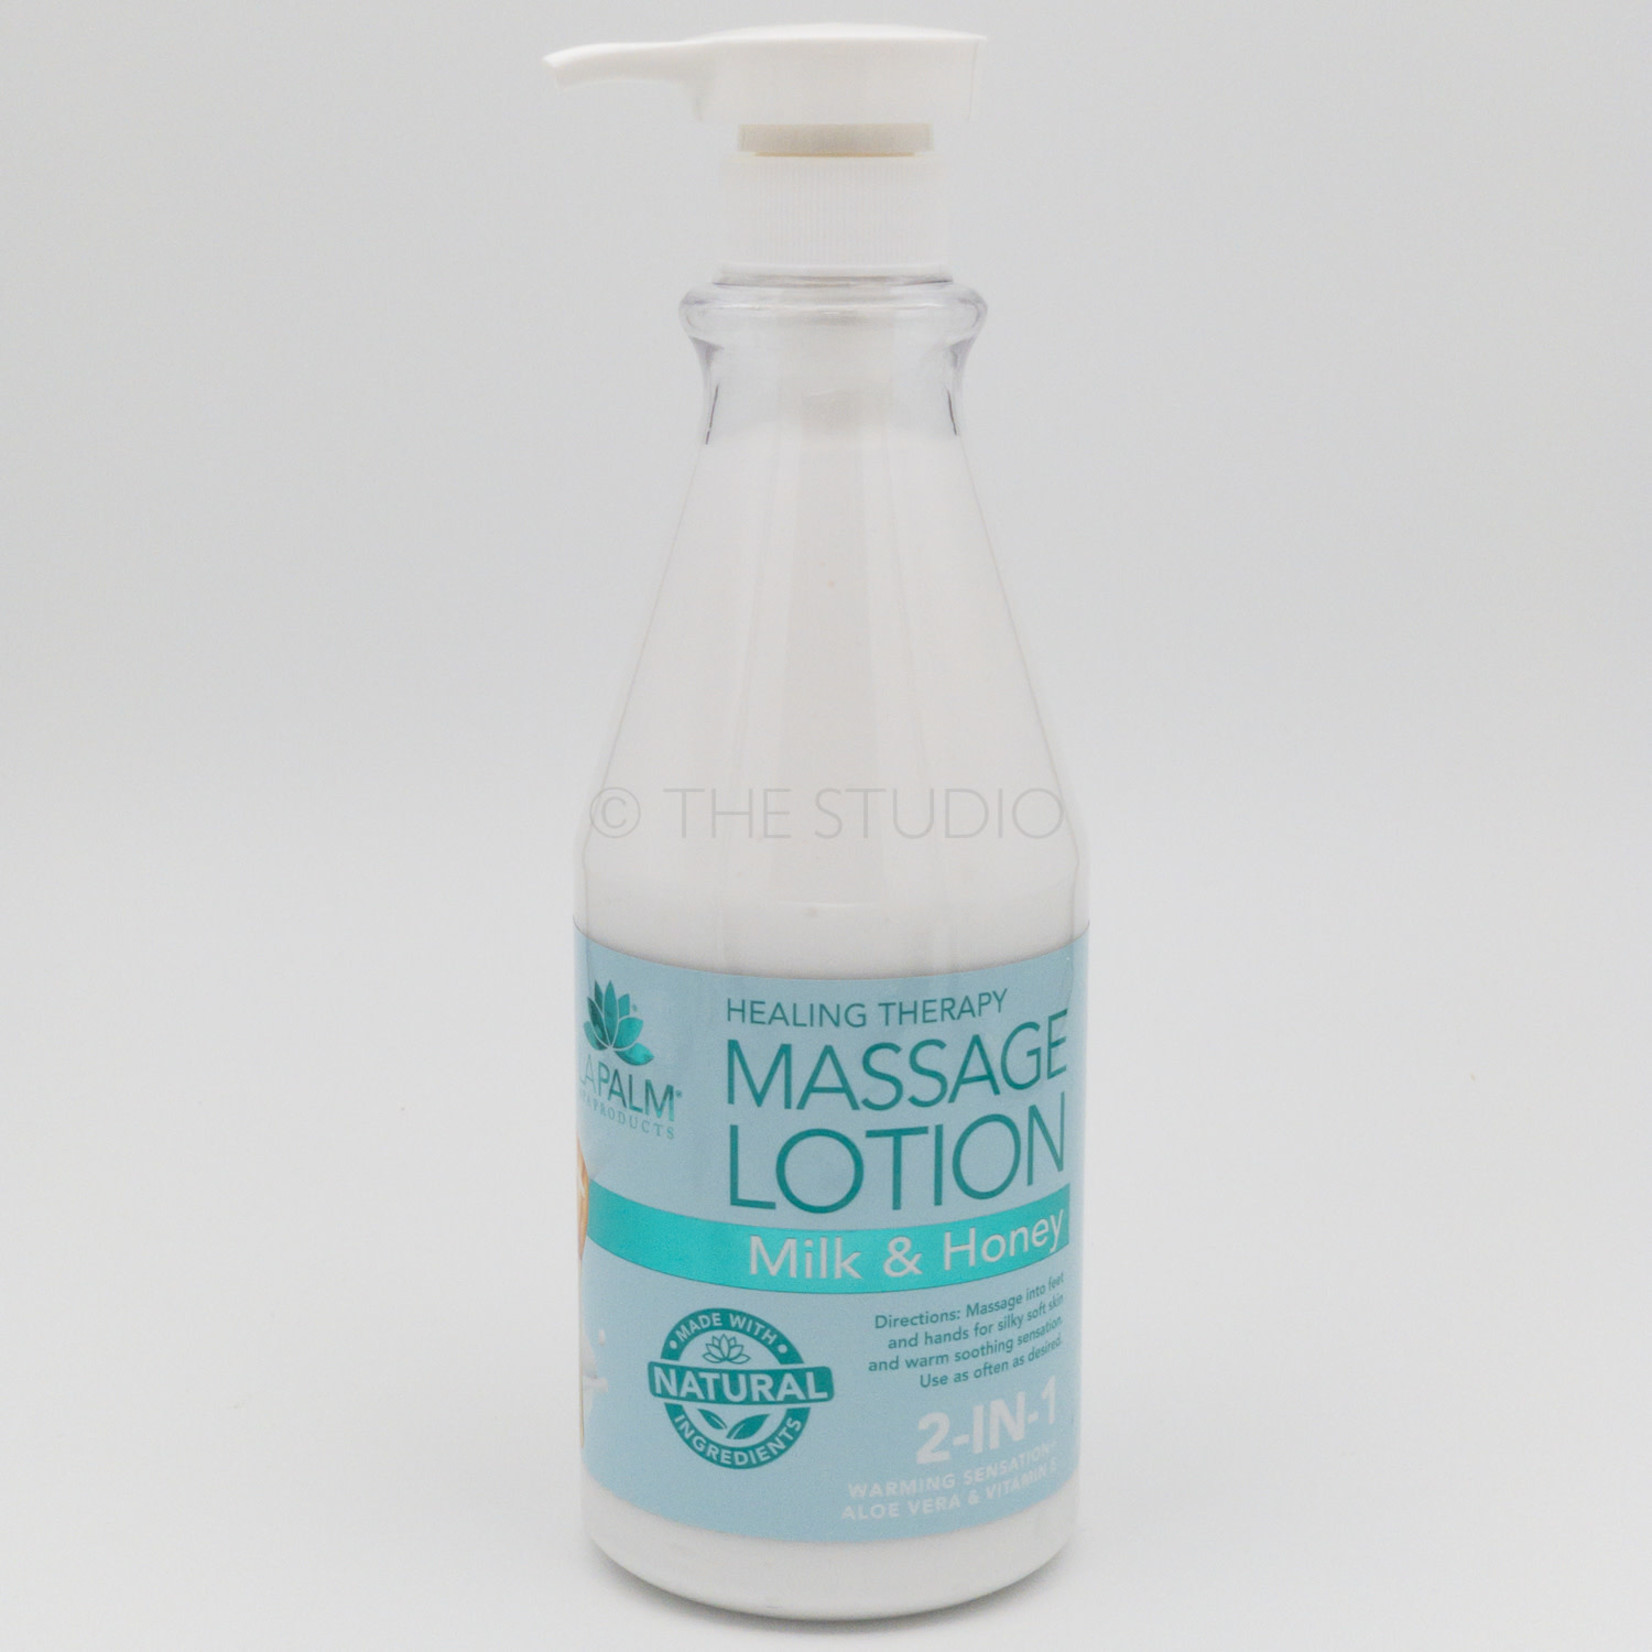 LA PALM La Palm - Massage Lotion - 24 oz - Milk & Honey